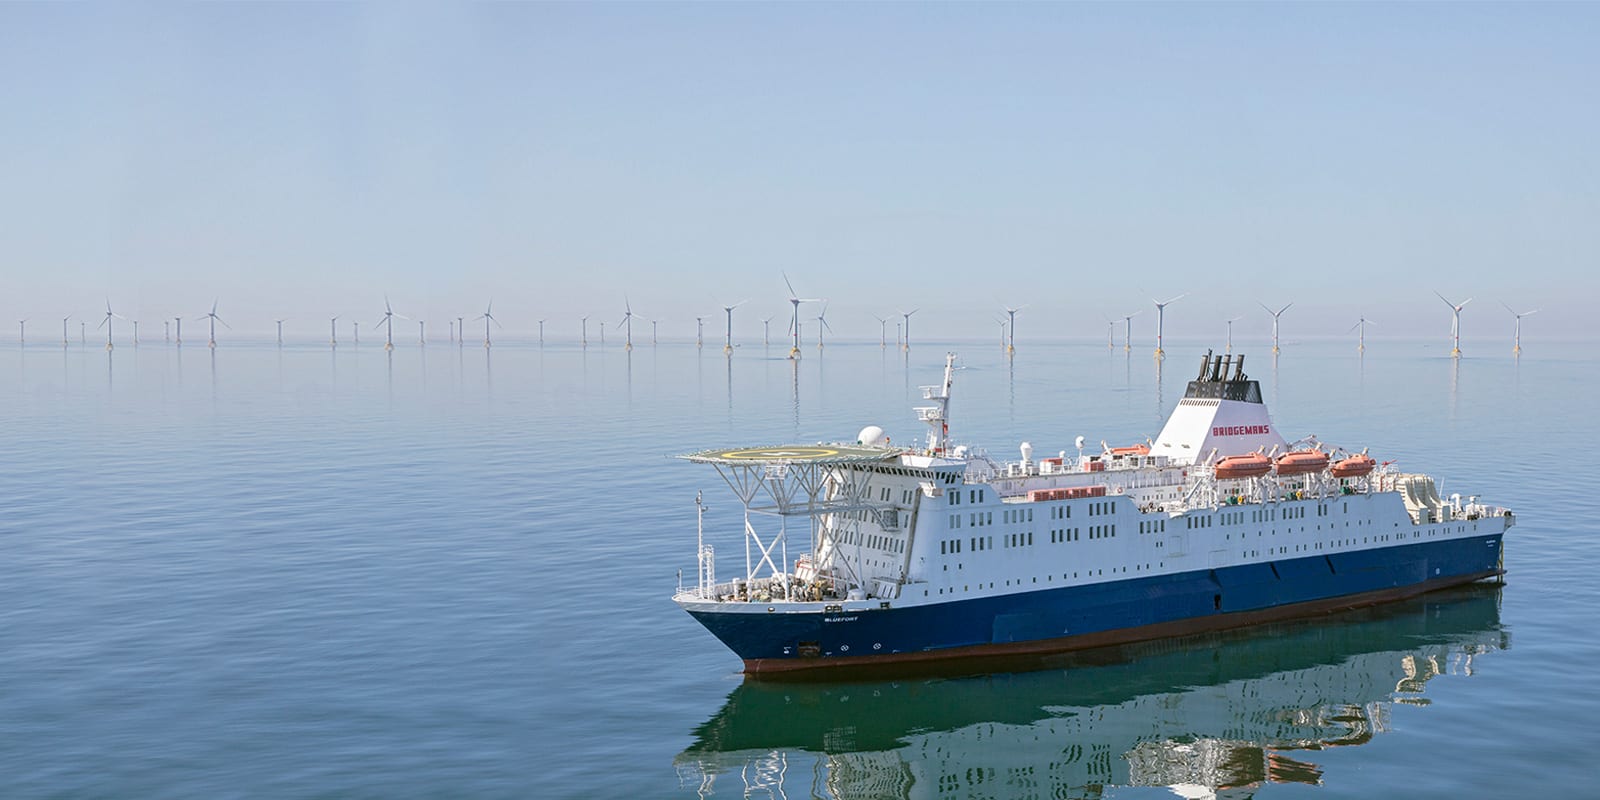 Bridgemans successfully completes MHI Vestas offshore wind contract